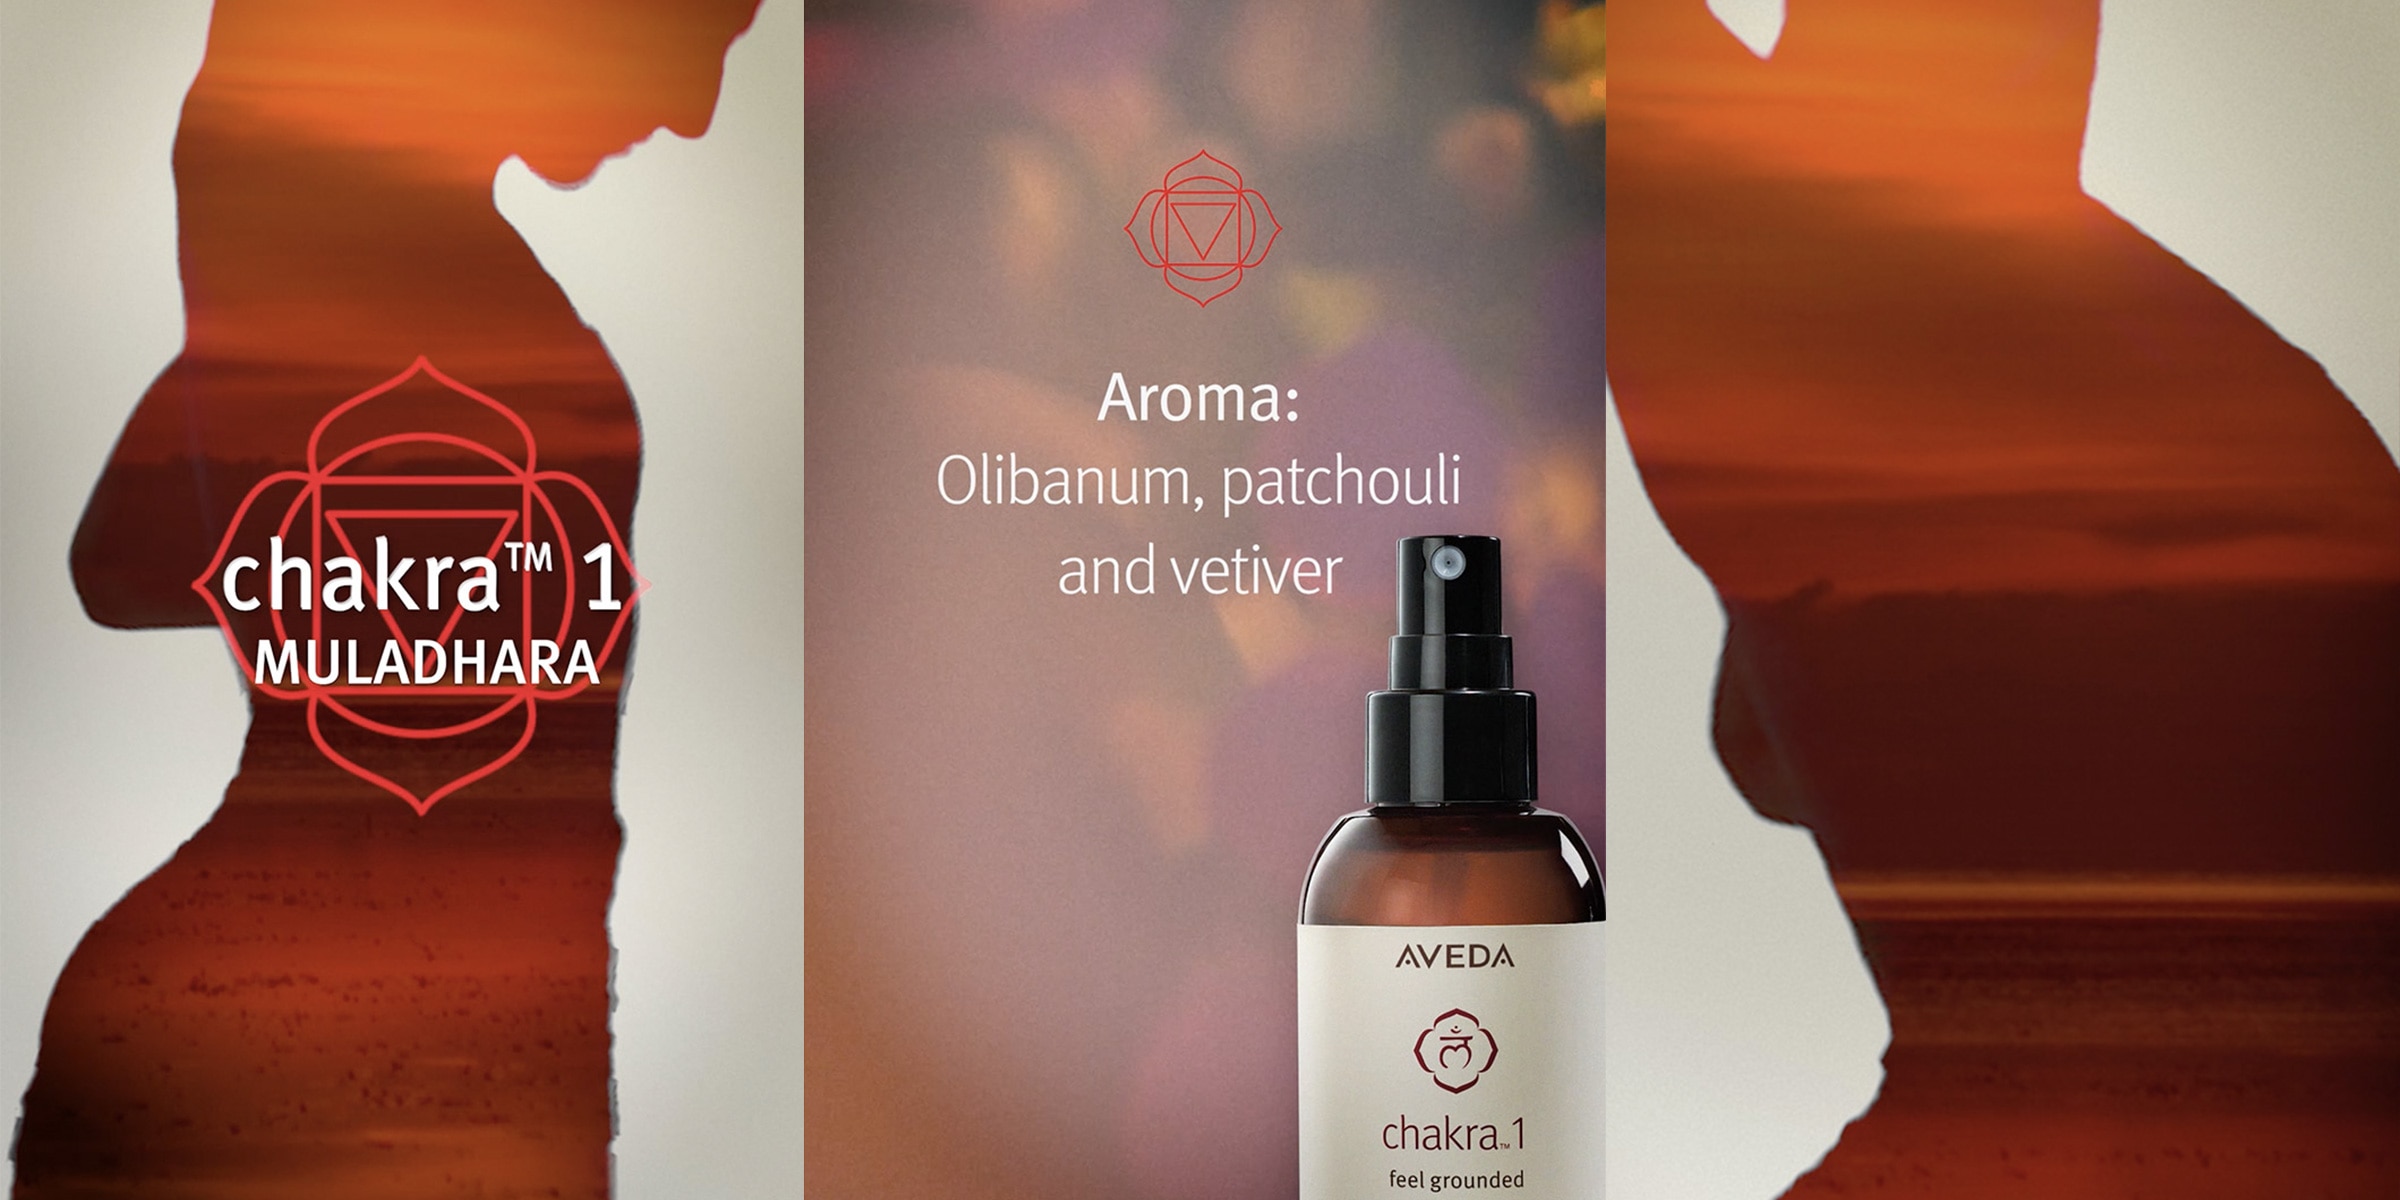 Chakra 1 aroma includes olibanum, patchouli & vetiver aromas.